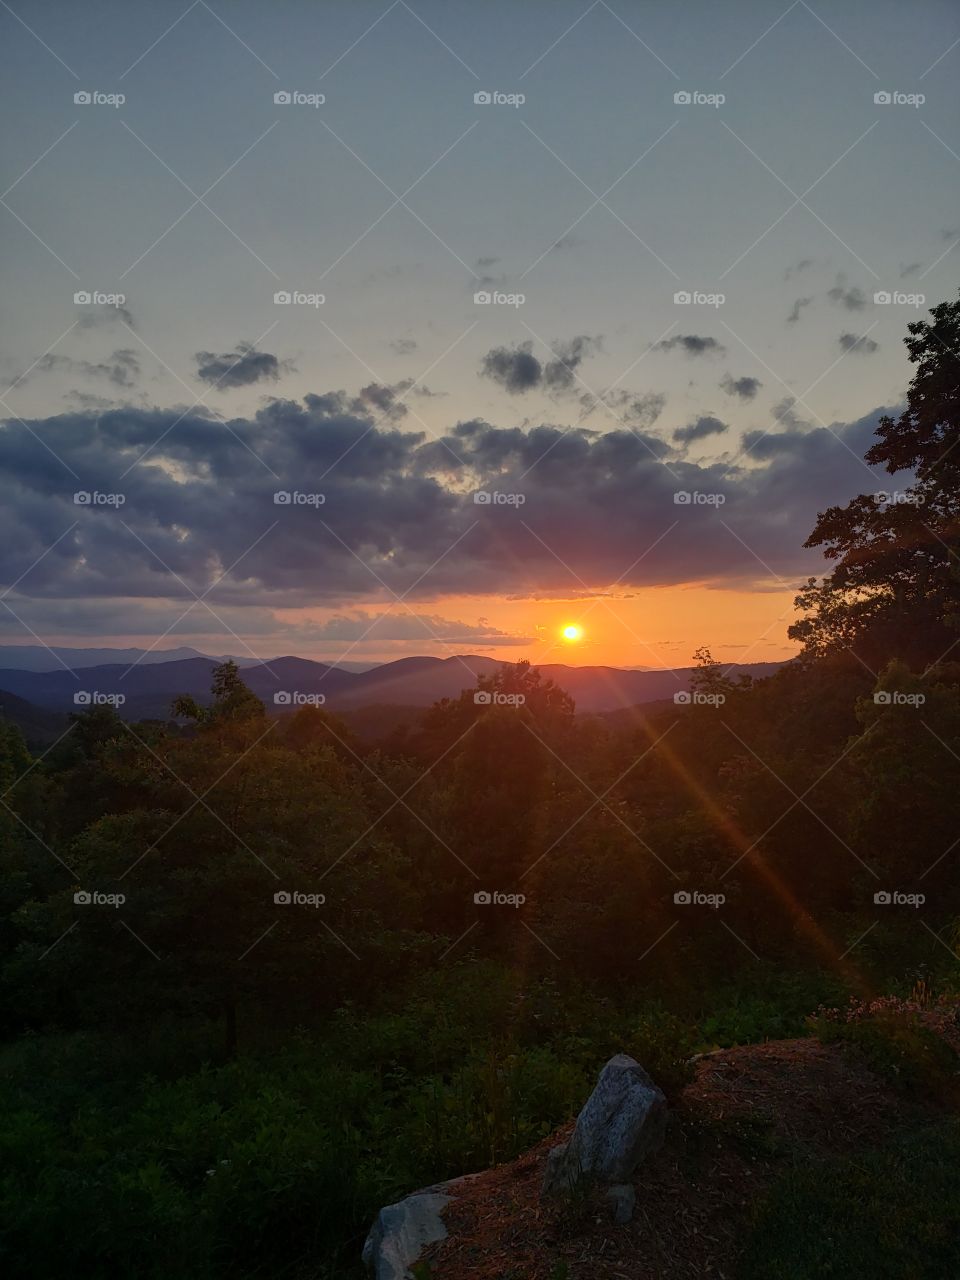 Appalachian Mountain Sunset